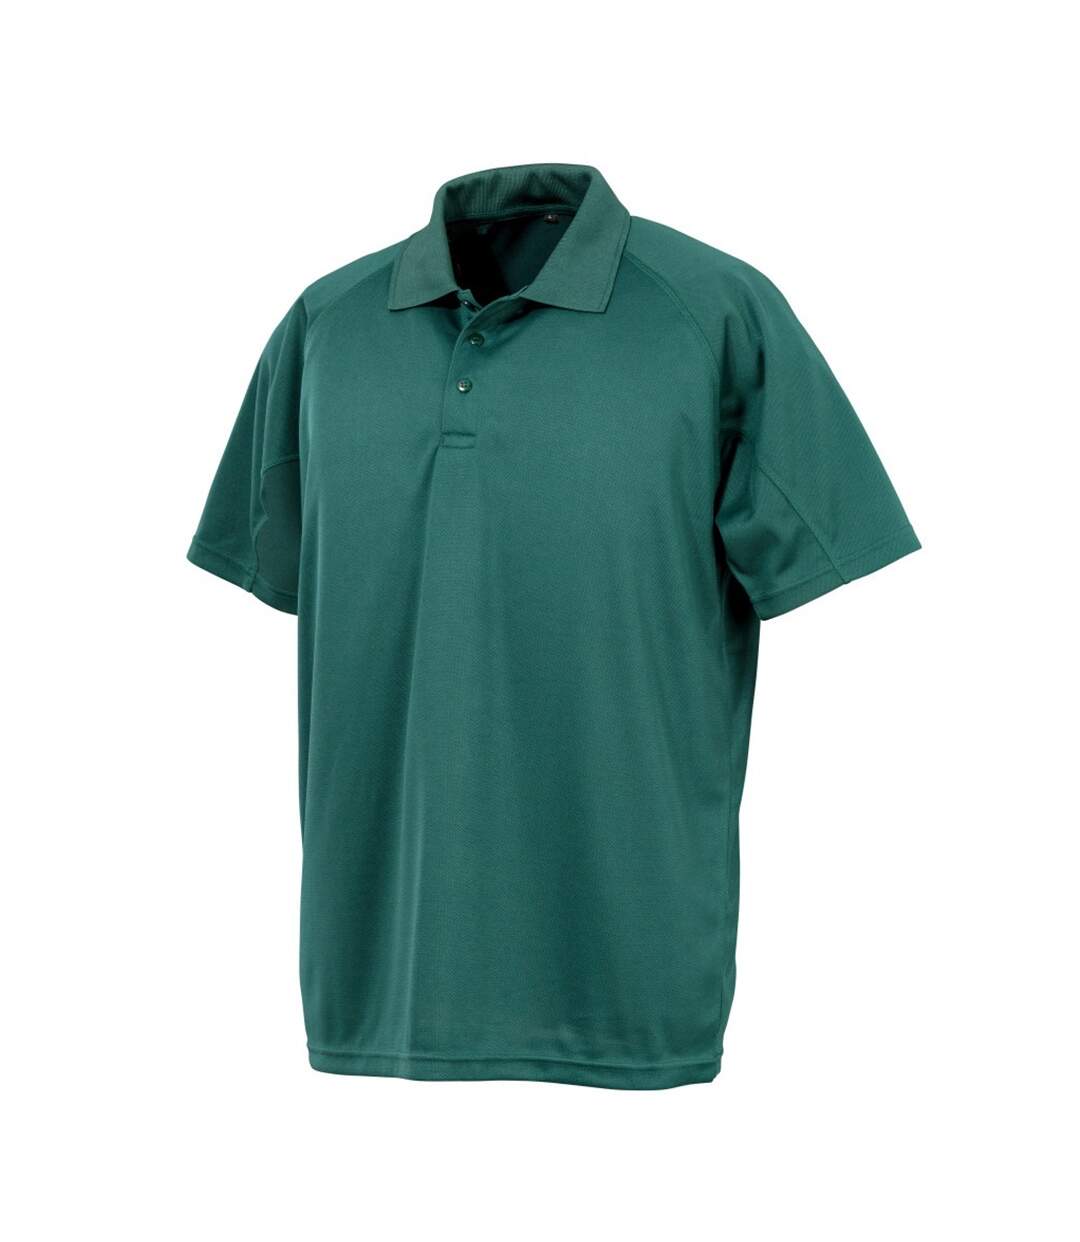 Spiro Impact Mens Performance Aircool Polo T-Shirt (Bottle Green)